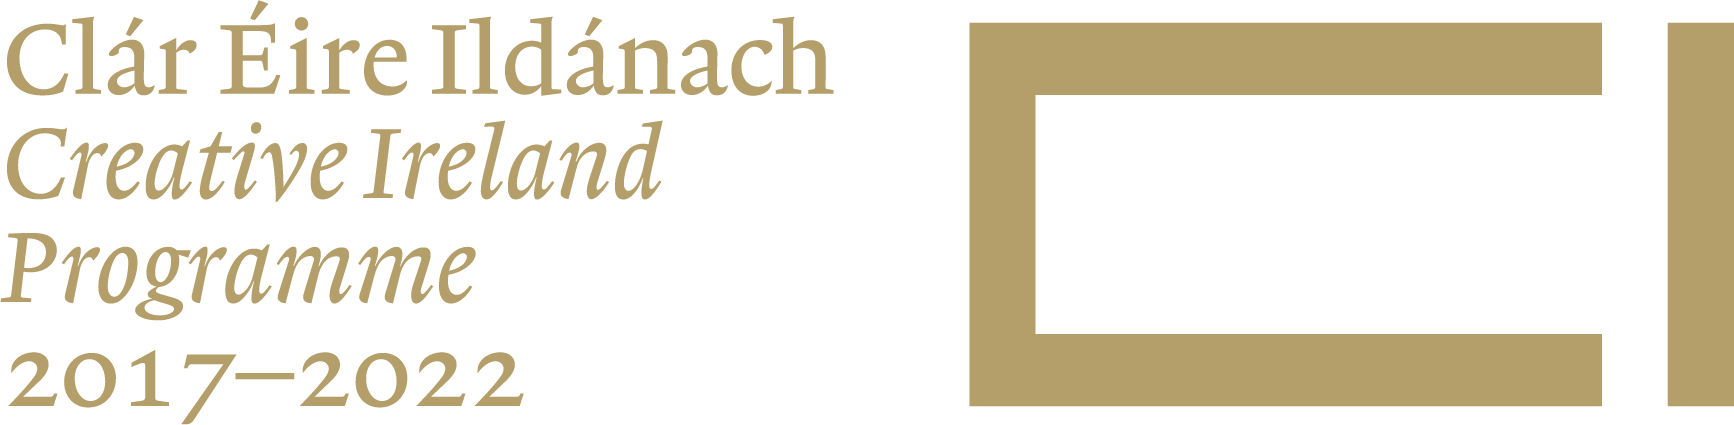 Logo of Creative Ireland Programme - Clar Eire Ildanach (2017-2022)